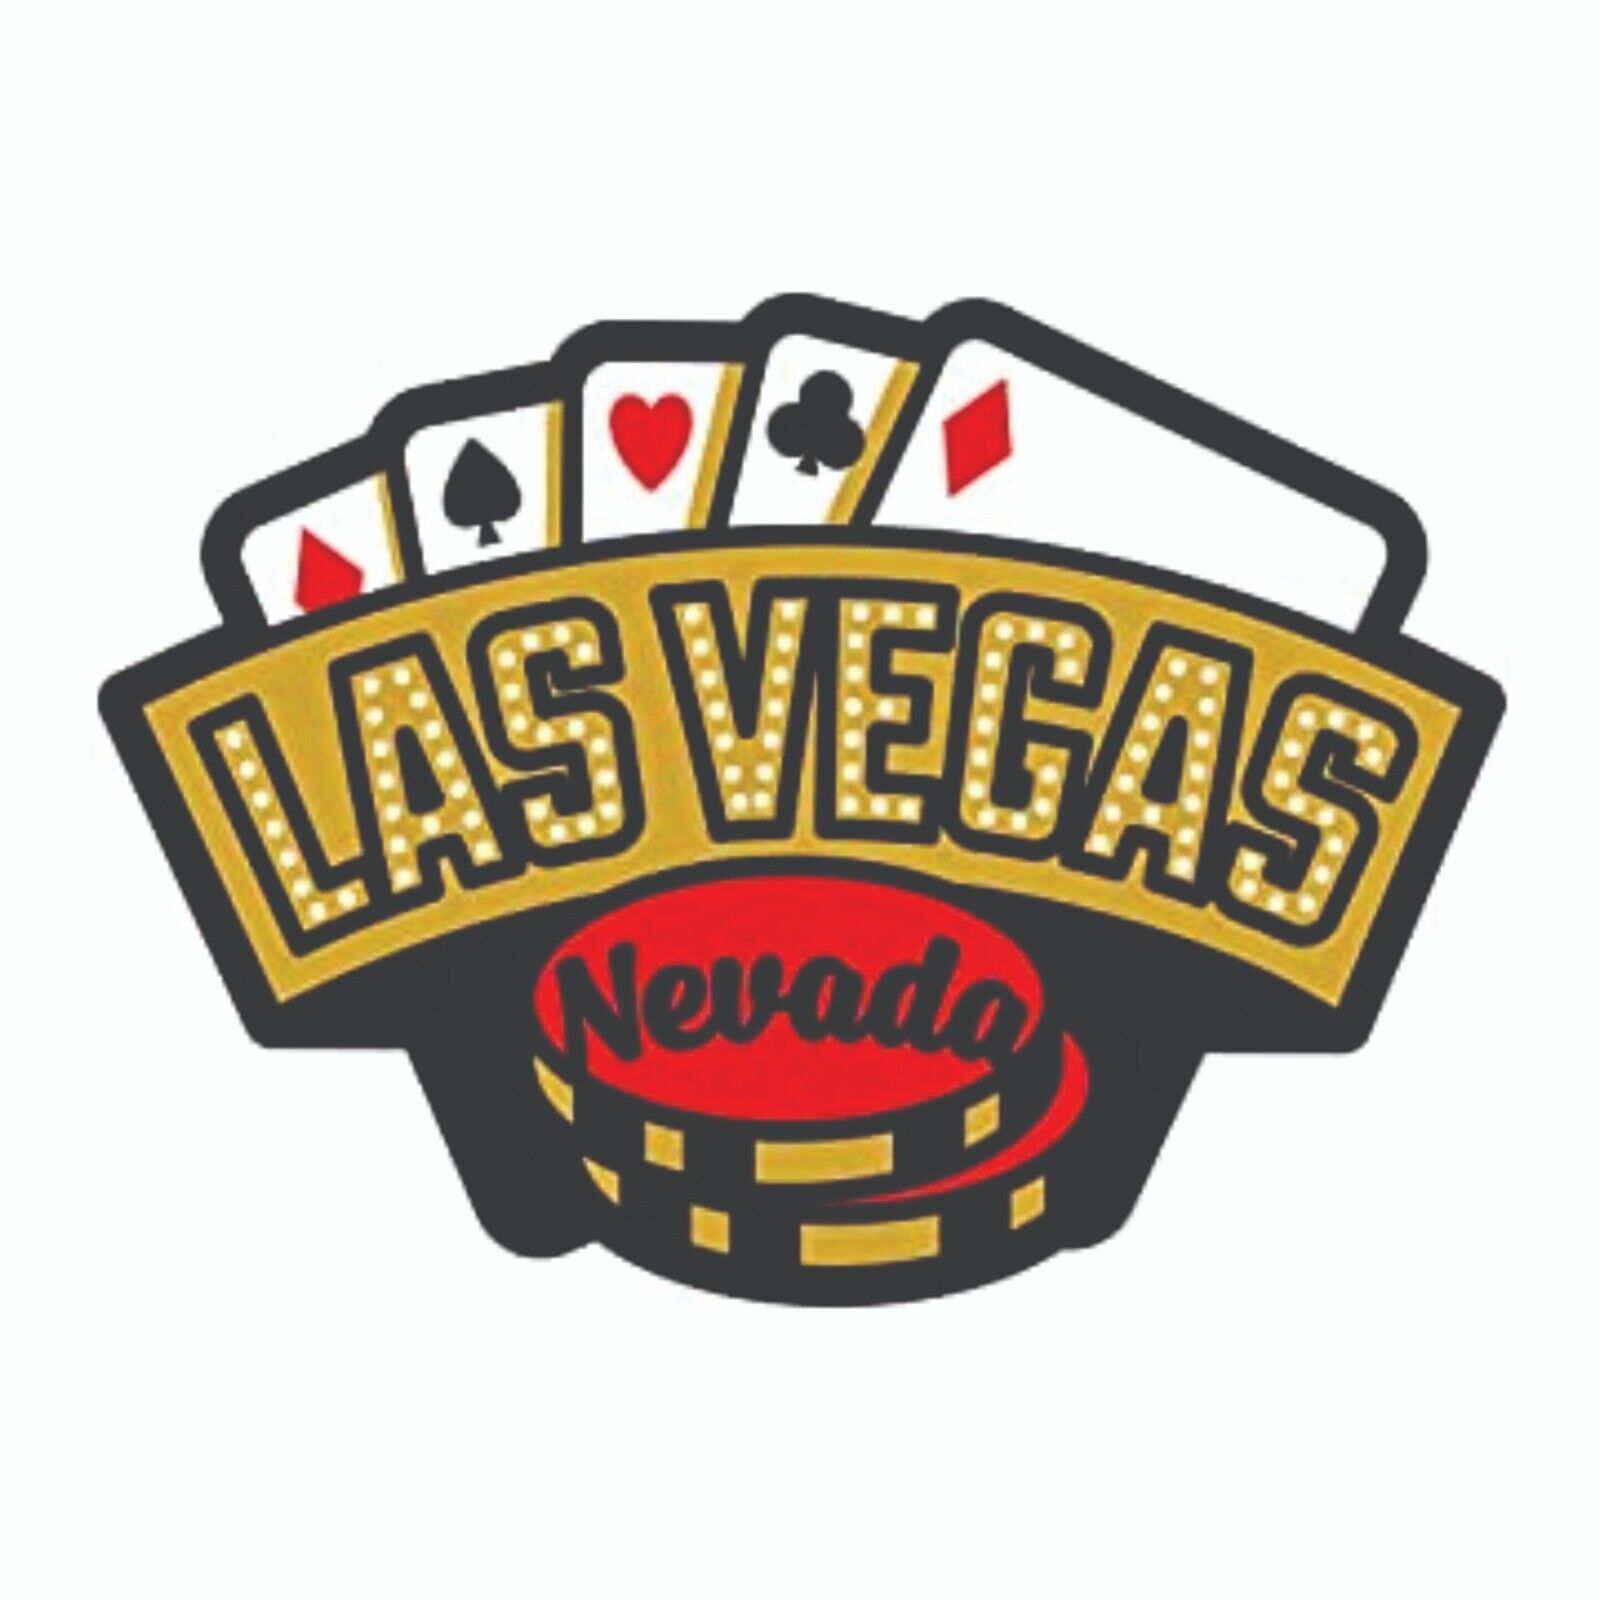 Las Vegas Nevada Sticker Decal